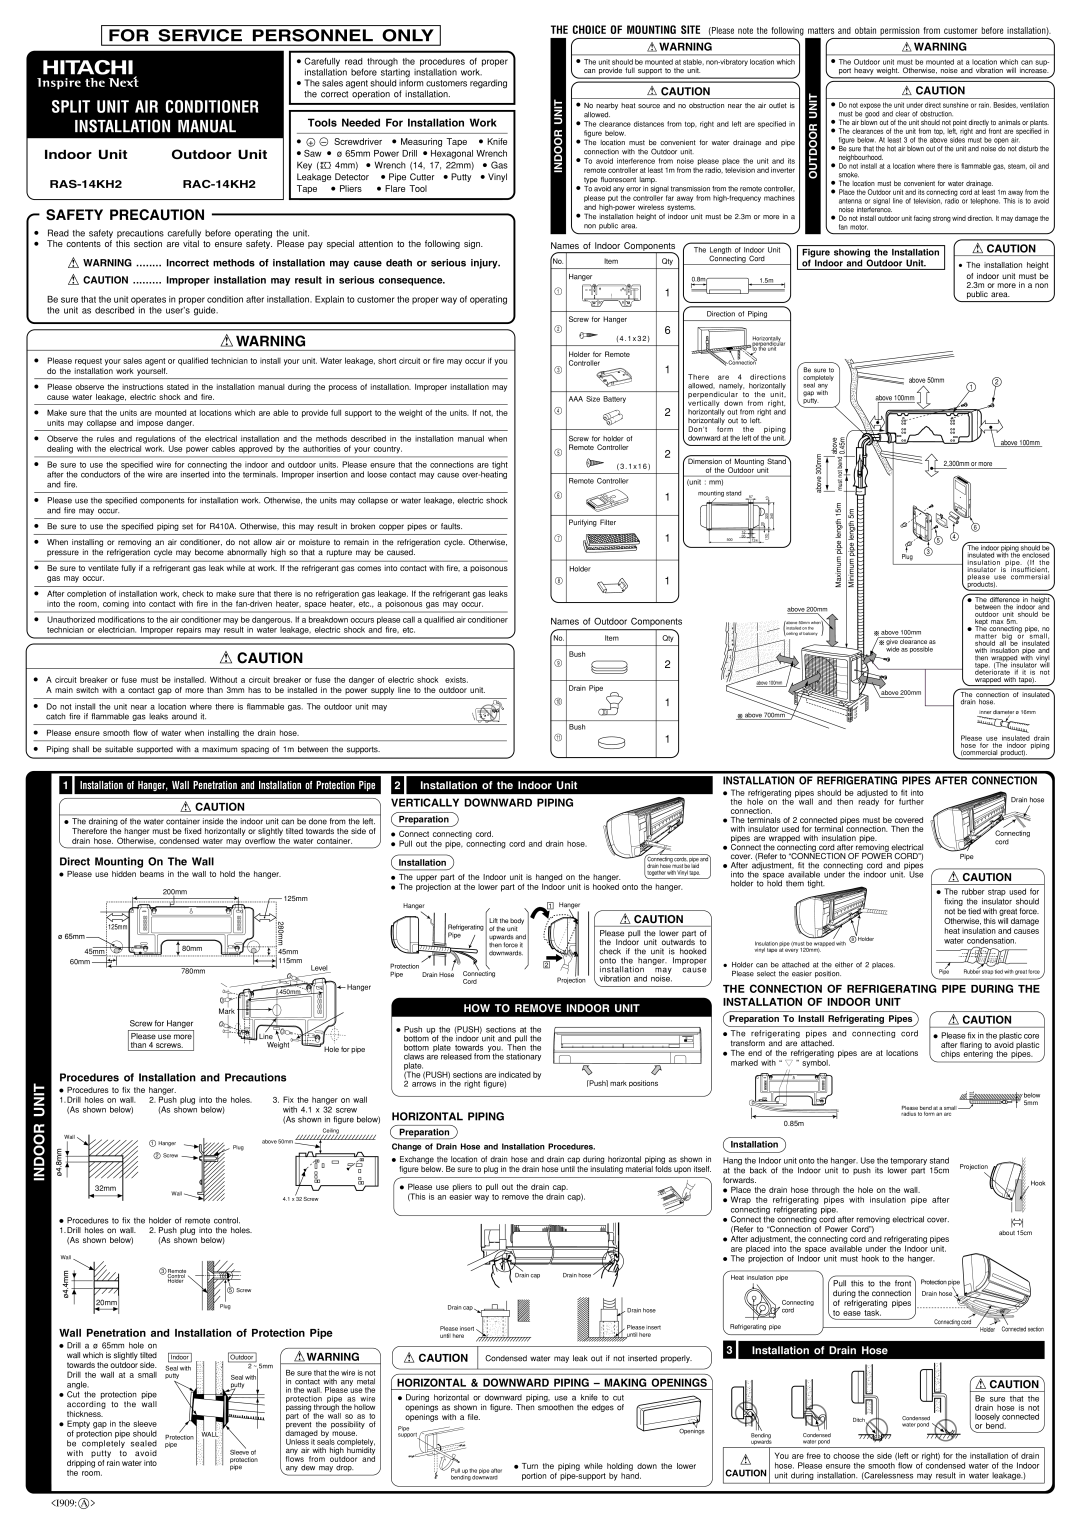 Hitachi RAC-14KH2 installation manual Safety Precaution, Outdoor Unit, Indoorunit, How To Remove Indoor Unit 